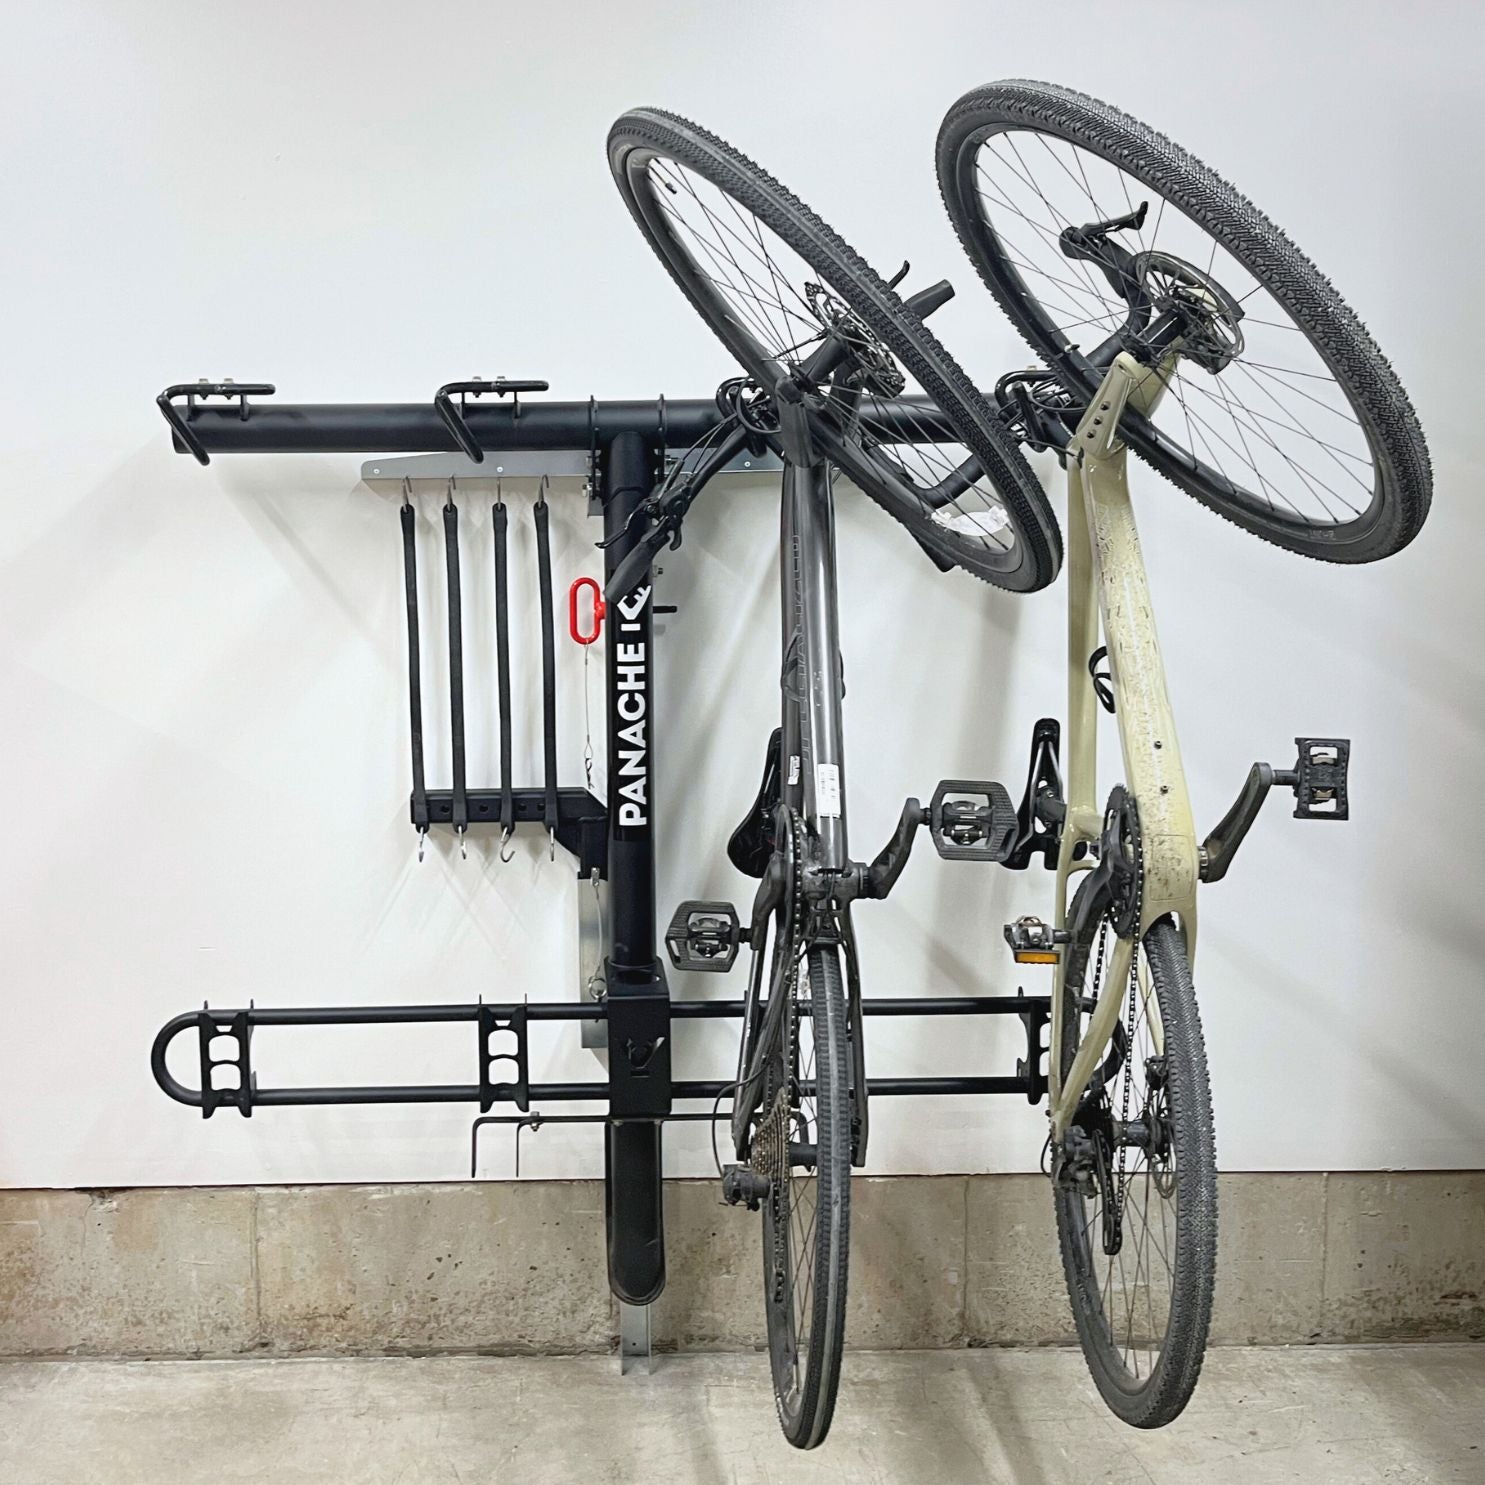 panache rack rakarack wall mount for panache rack vertical bike racks  installed on wall with bike rack and bikes